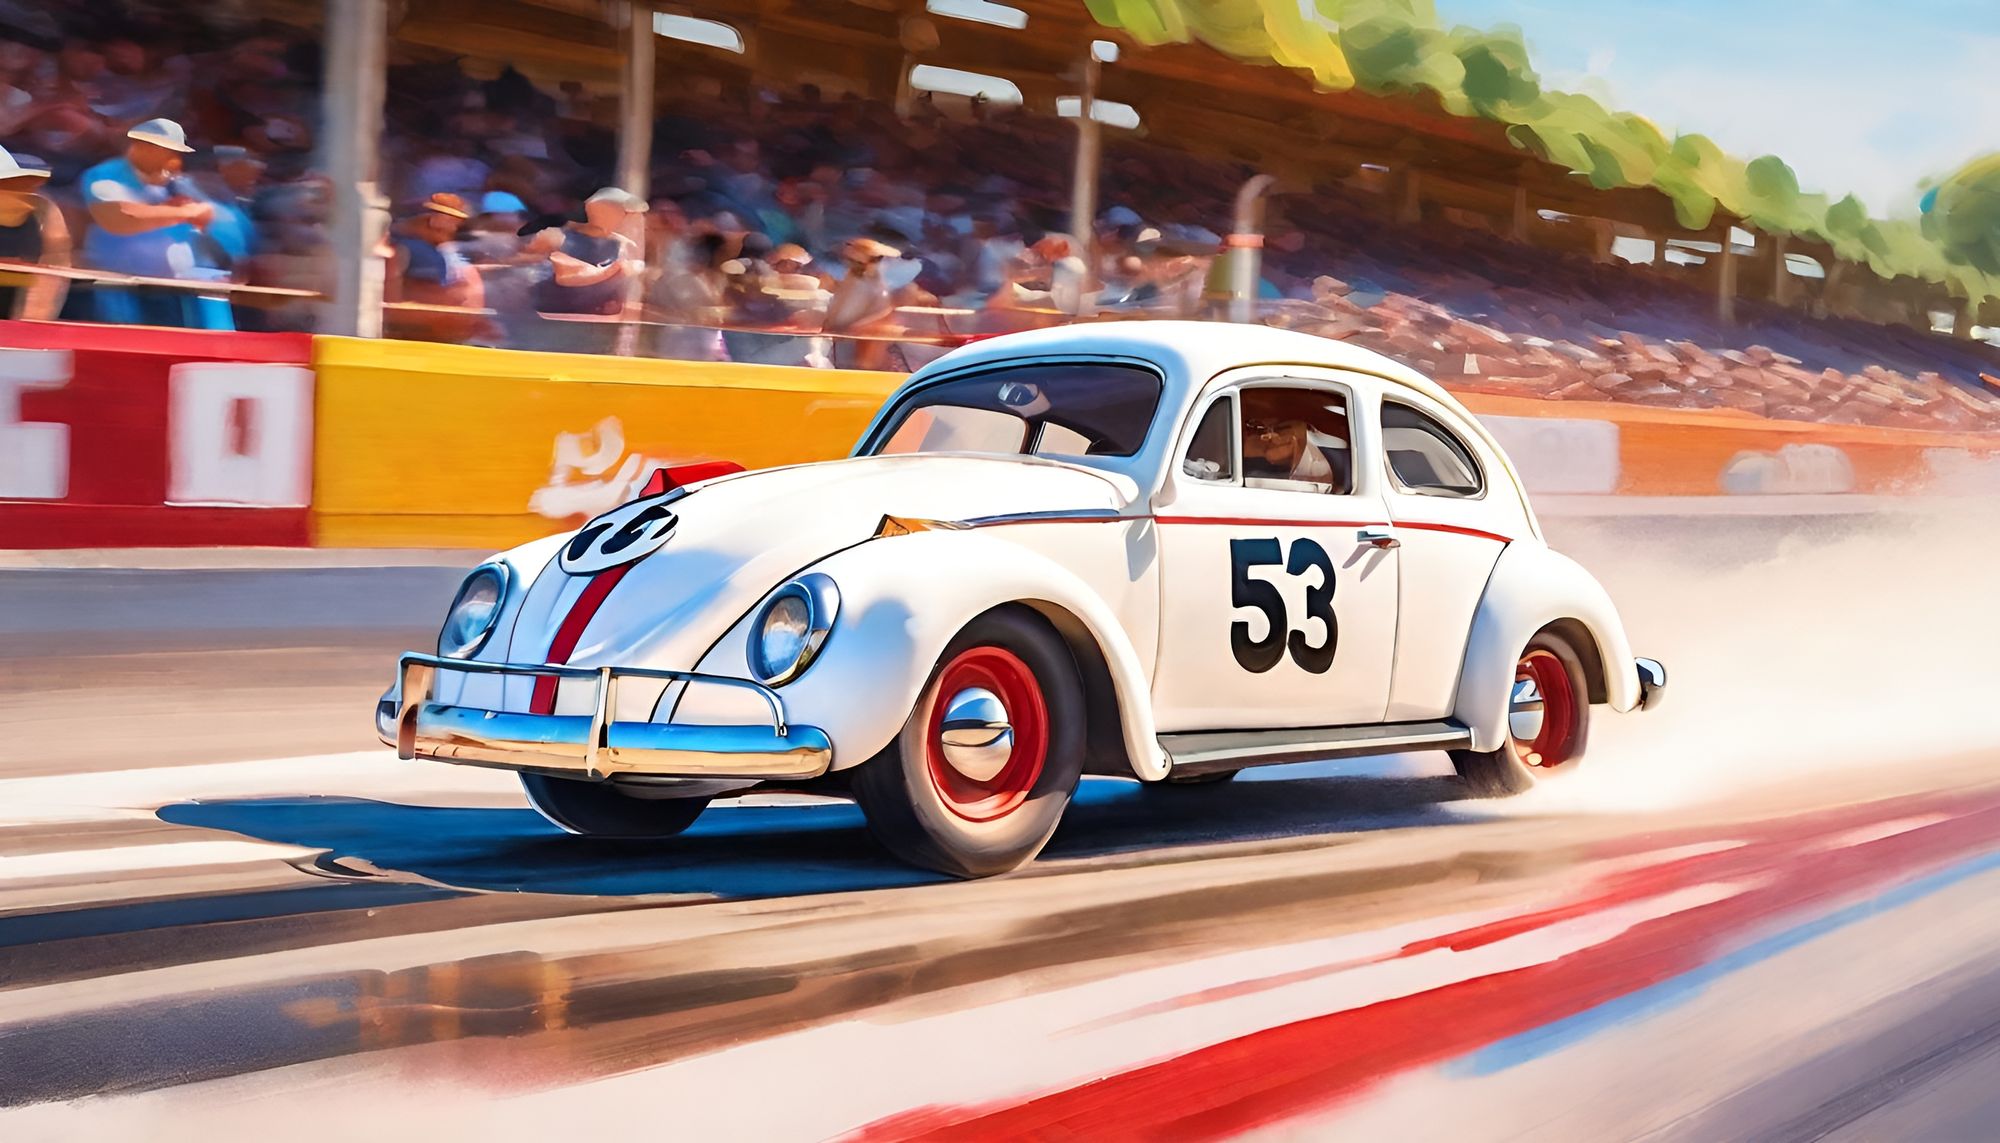 Herbie by Christofer Looss on Dribbble